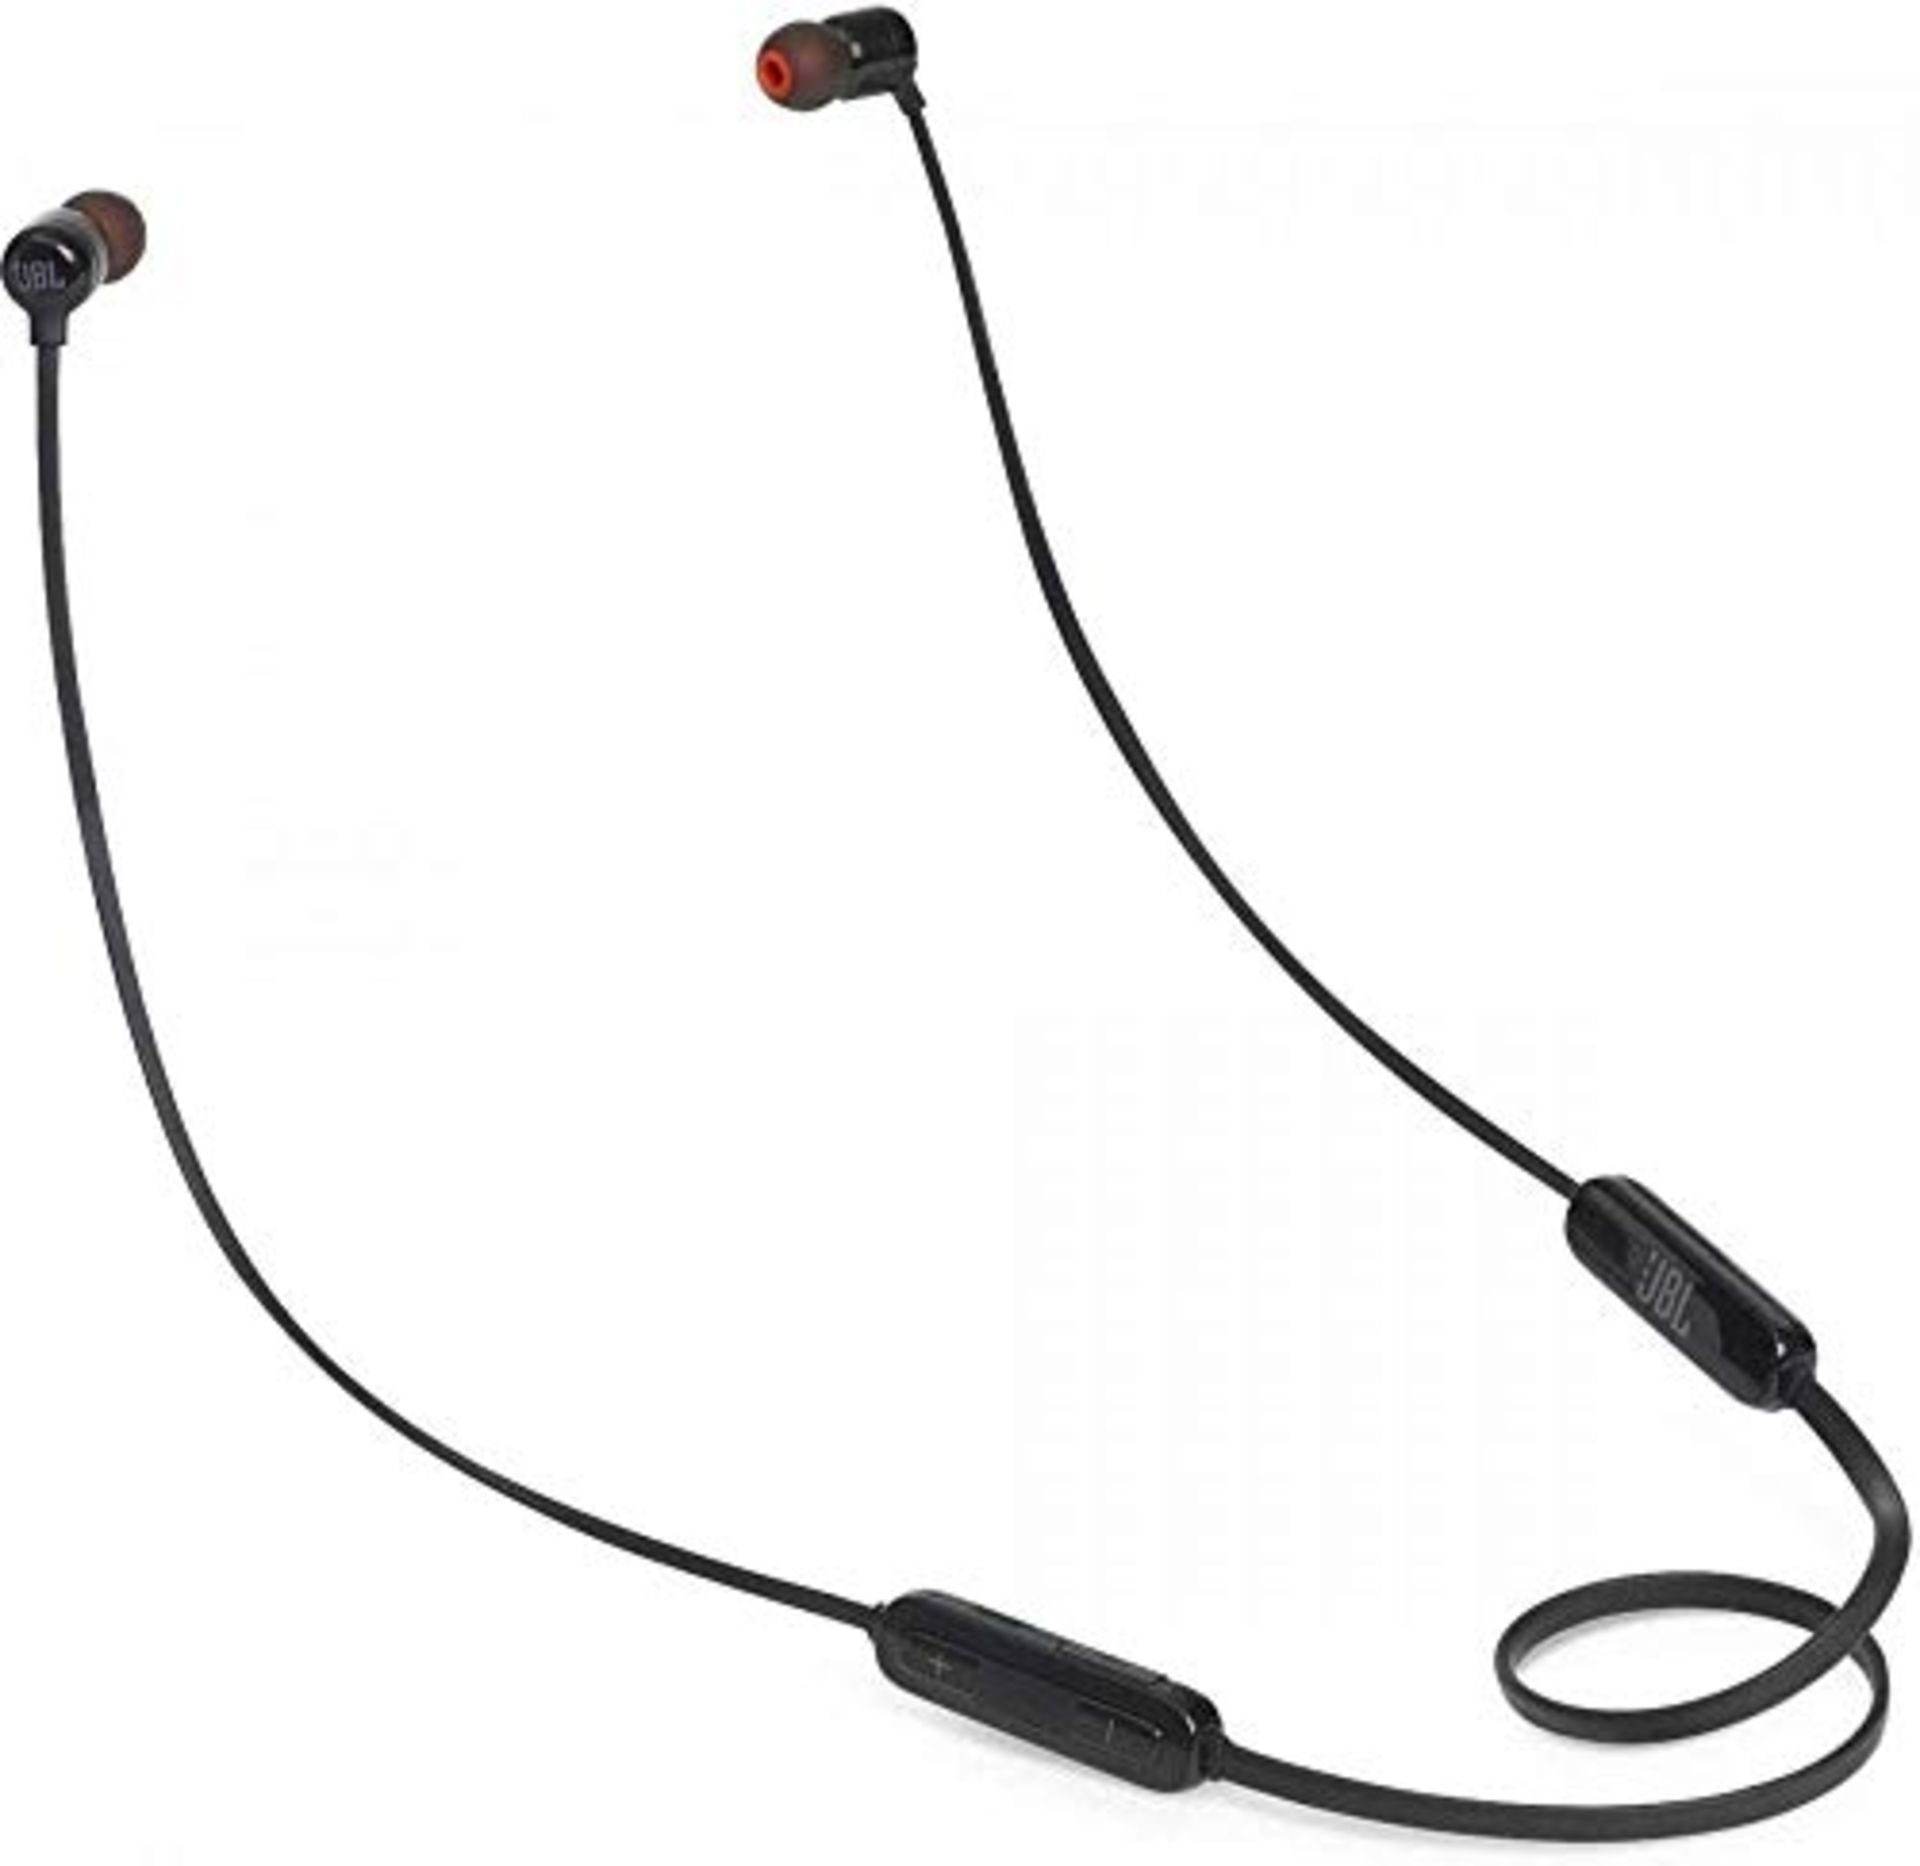 JBL Tune110BT in-ear Bluetooth headphones in black - wireless earphones with integrate